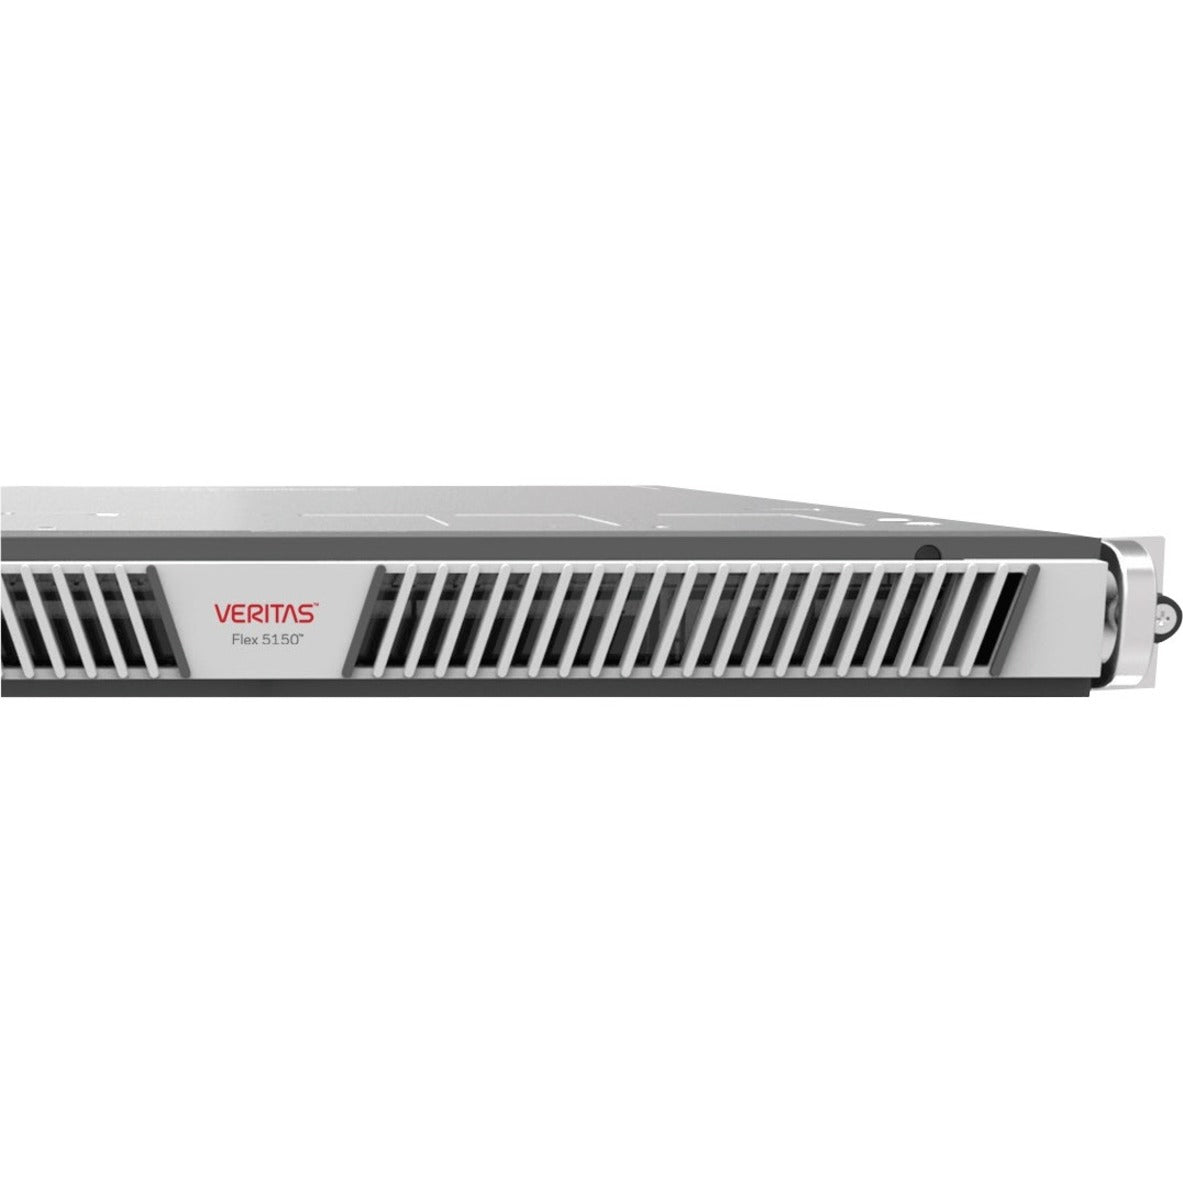 Veritas 26116-M0008 Flex System 5150 NAS Storage System, 15TB Total Hard Drive Capacity Installed, 12Gb/s SAS Controller, 6 Network (RJ-45) Ports